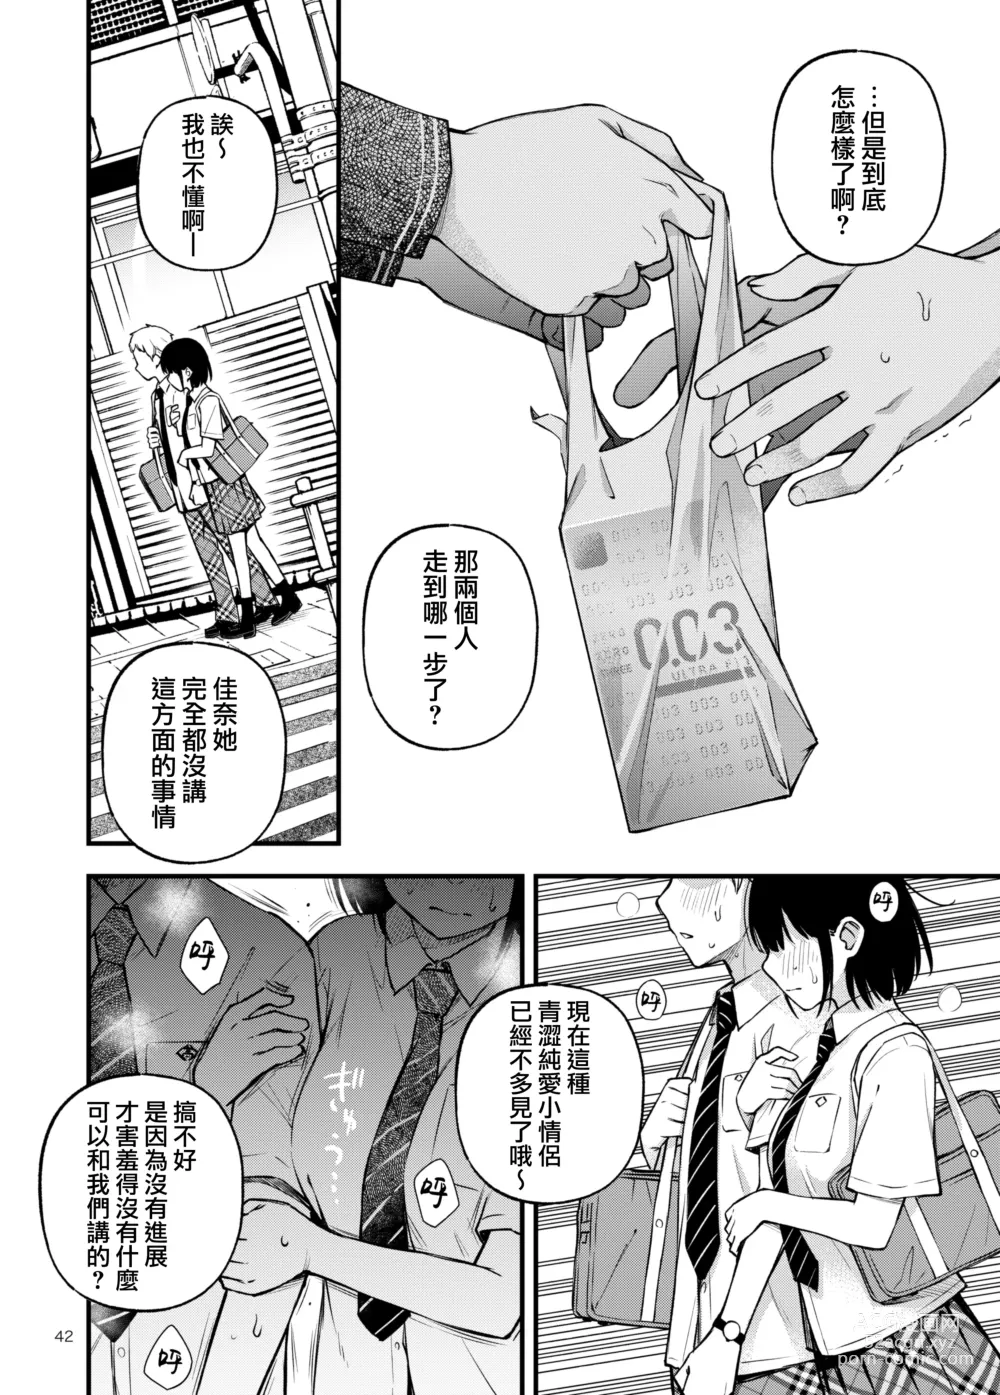 Page 43 of doujinshi 与处男初体验时觉醒的处女 2 #1-4